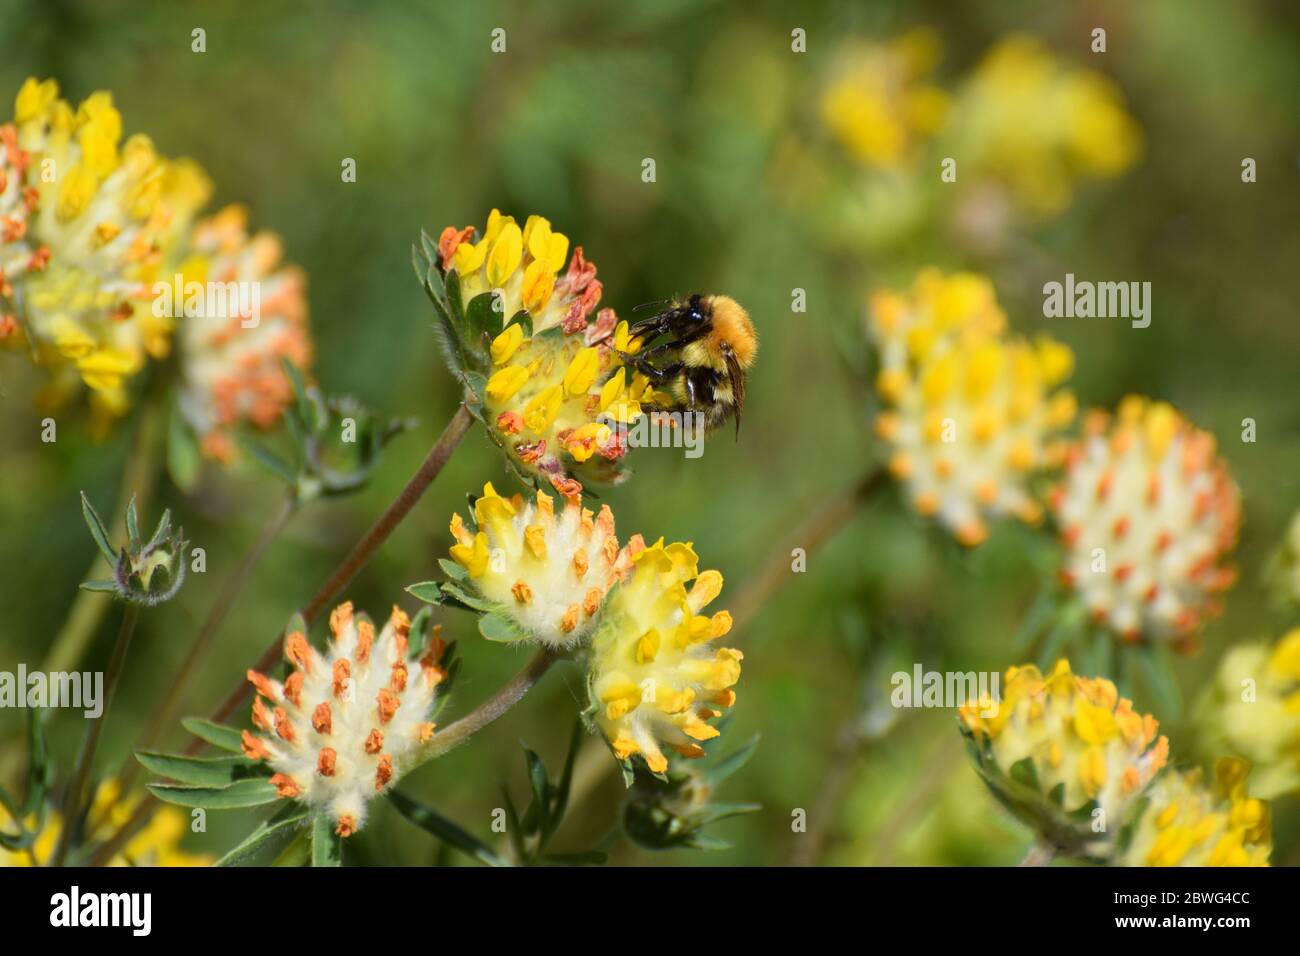 Bumble bee on yellow flowers Stock Photo